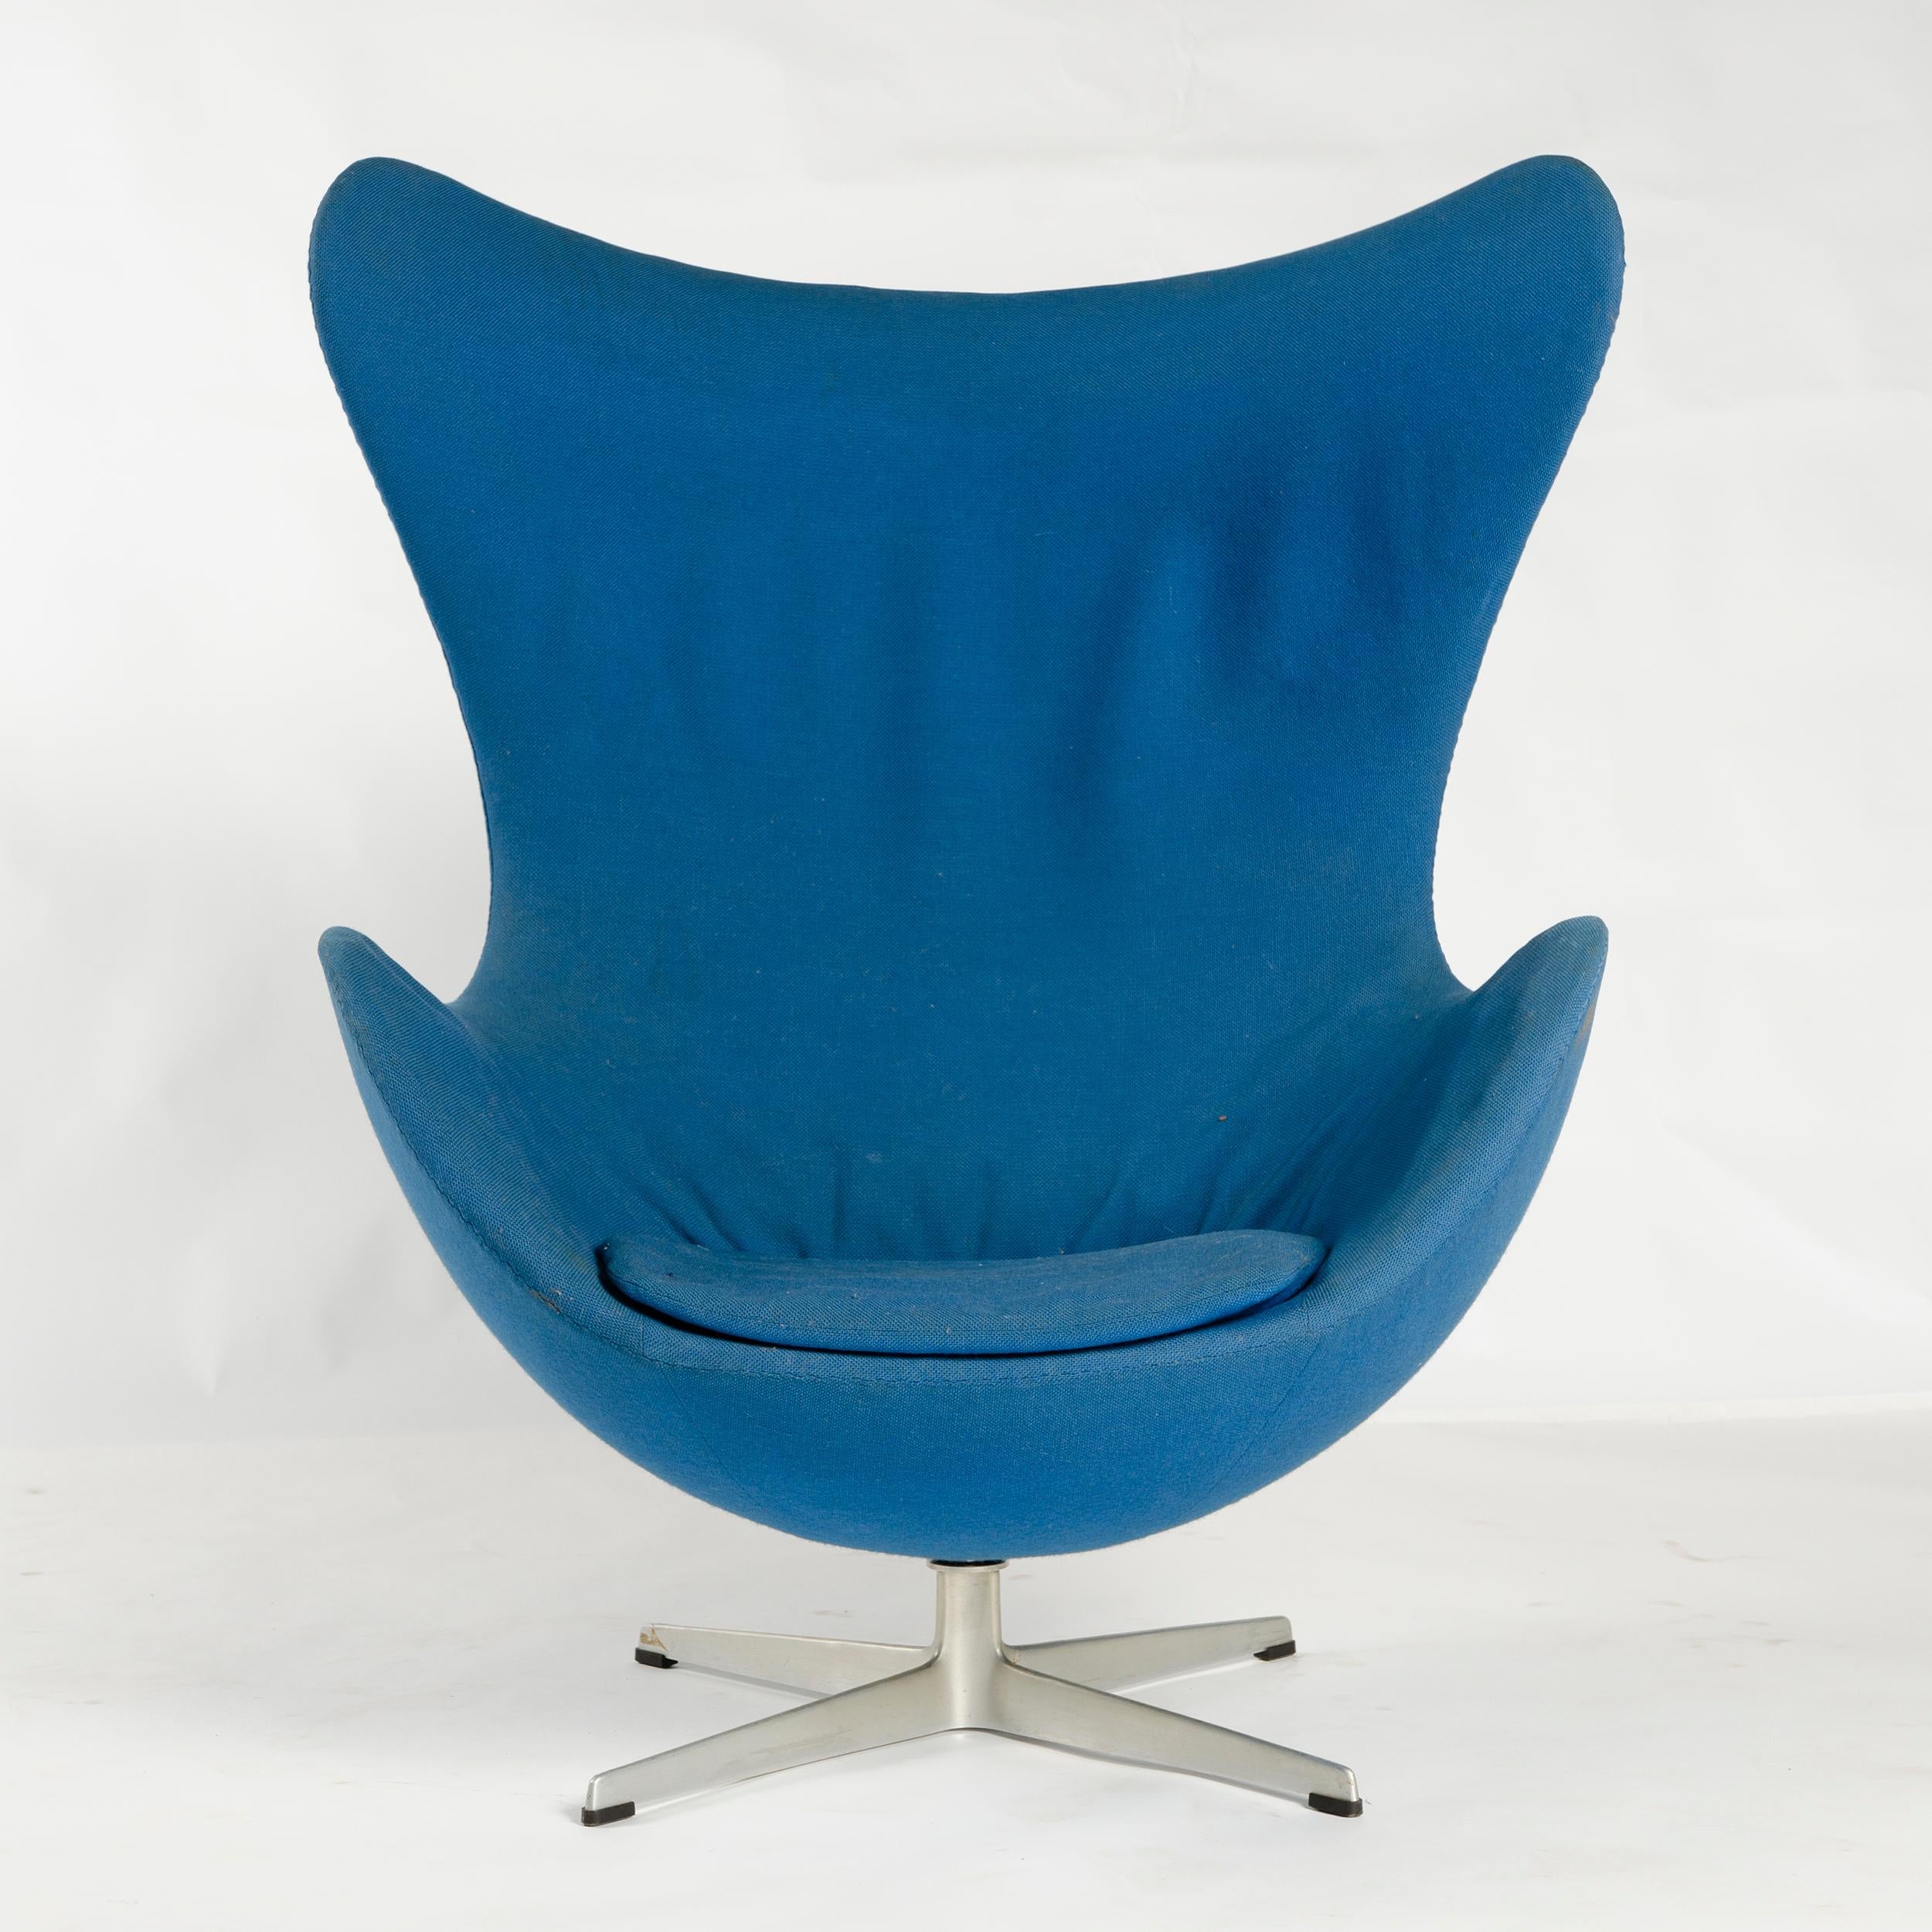 Danish 1950s Scandinavian Modern Lounge Chair by Arne Jacobsen for Fritz Hansen For Sale